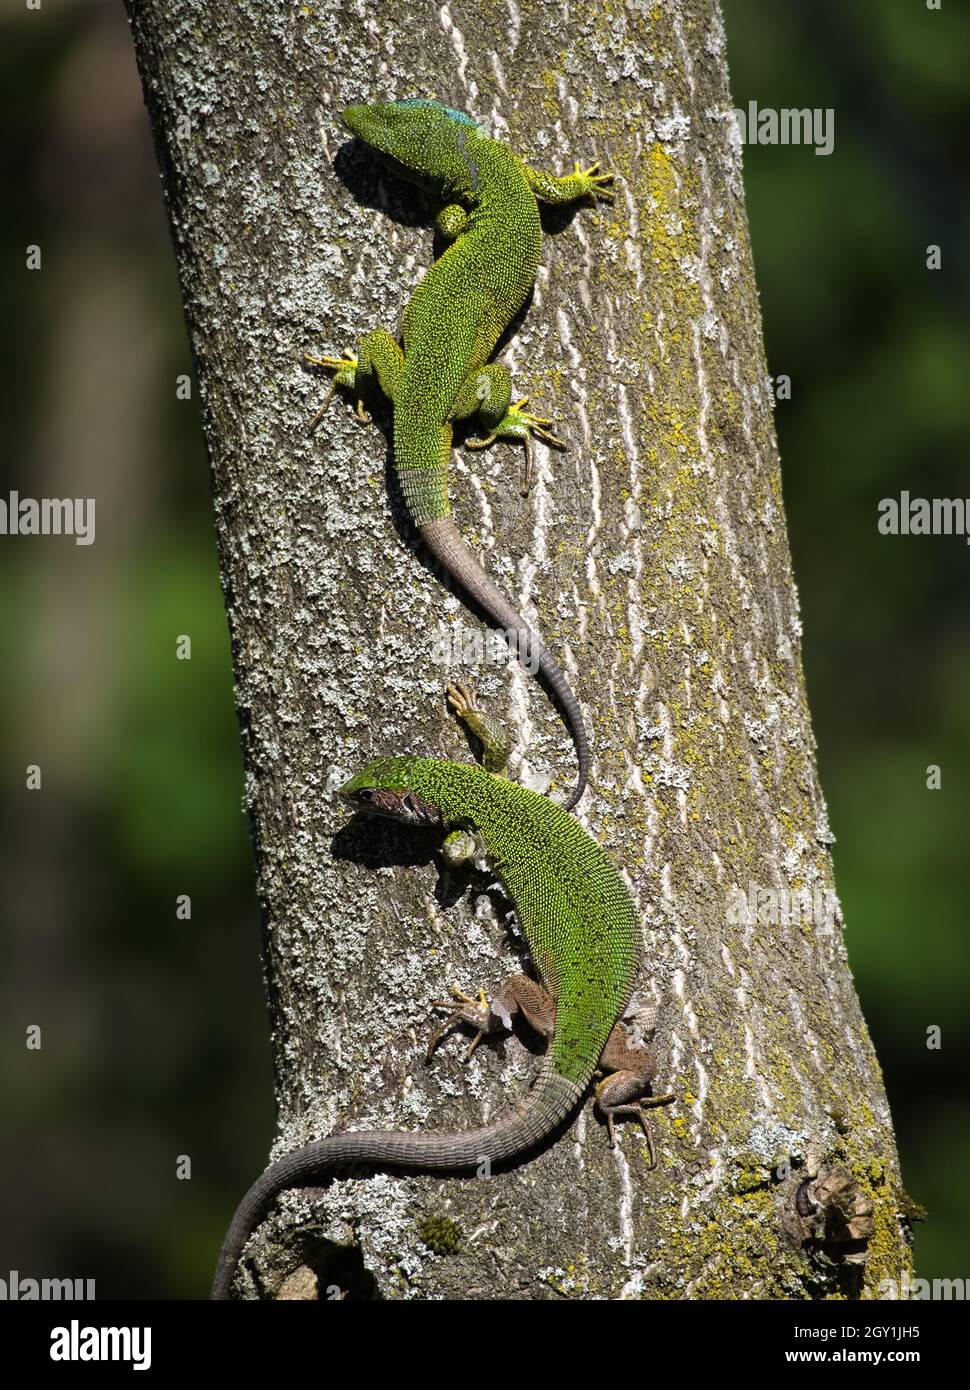 European Green Lizard Couple on a Tree Trunk Stock Photo